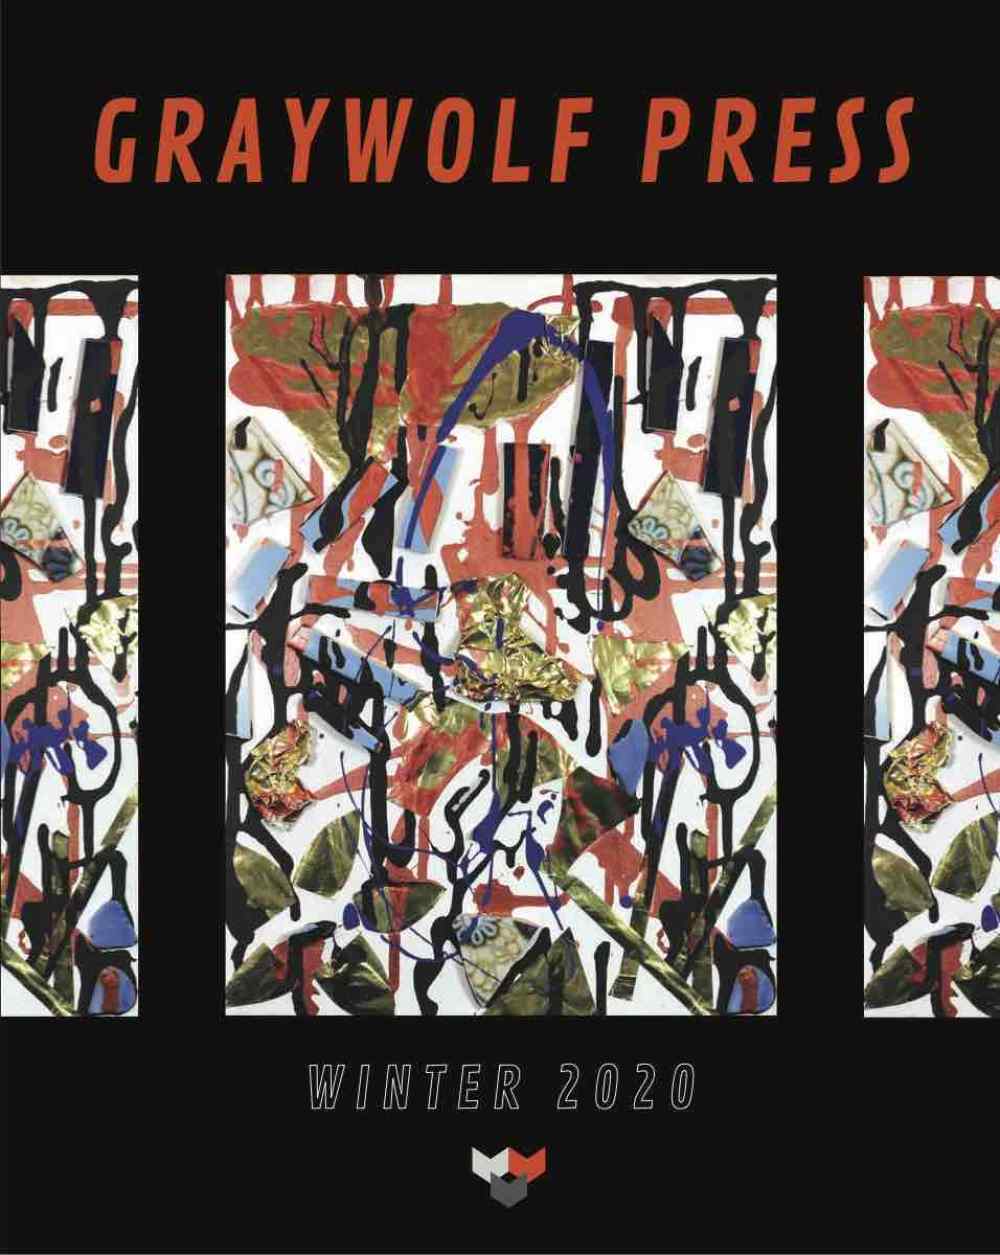 The White Card  Graywolf Press